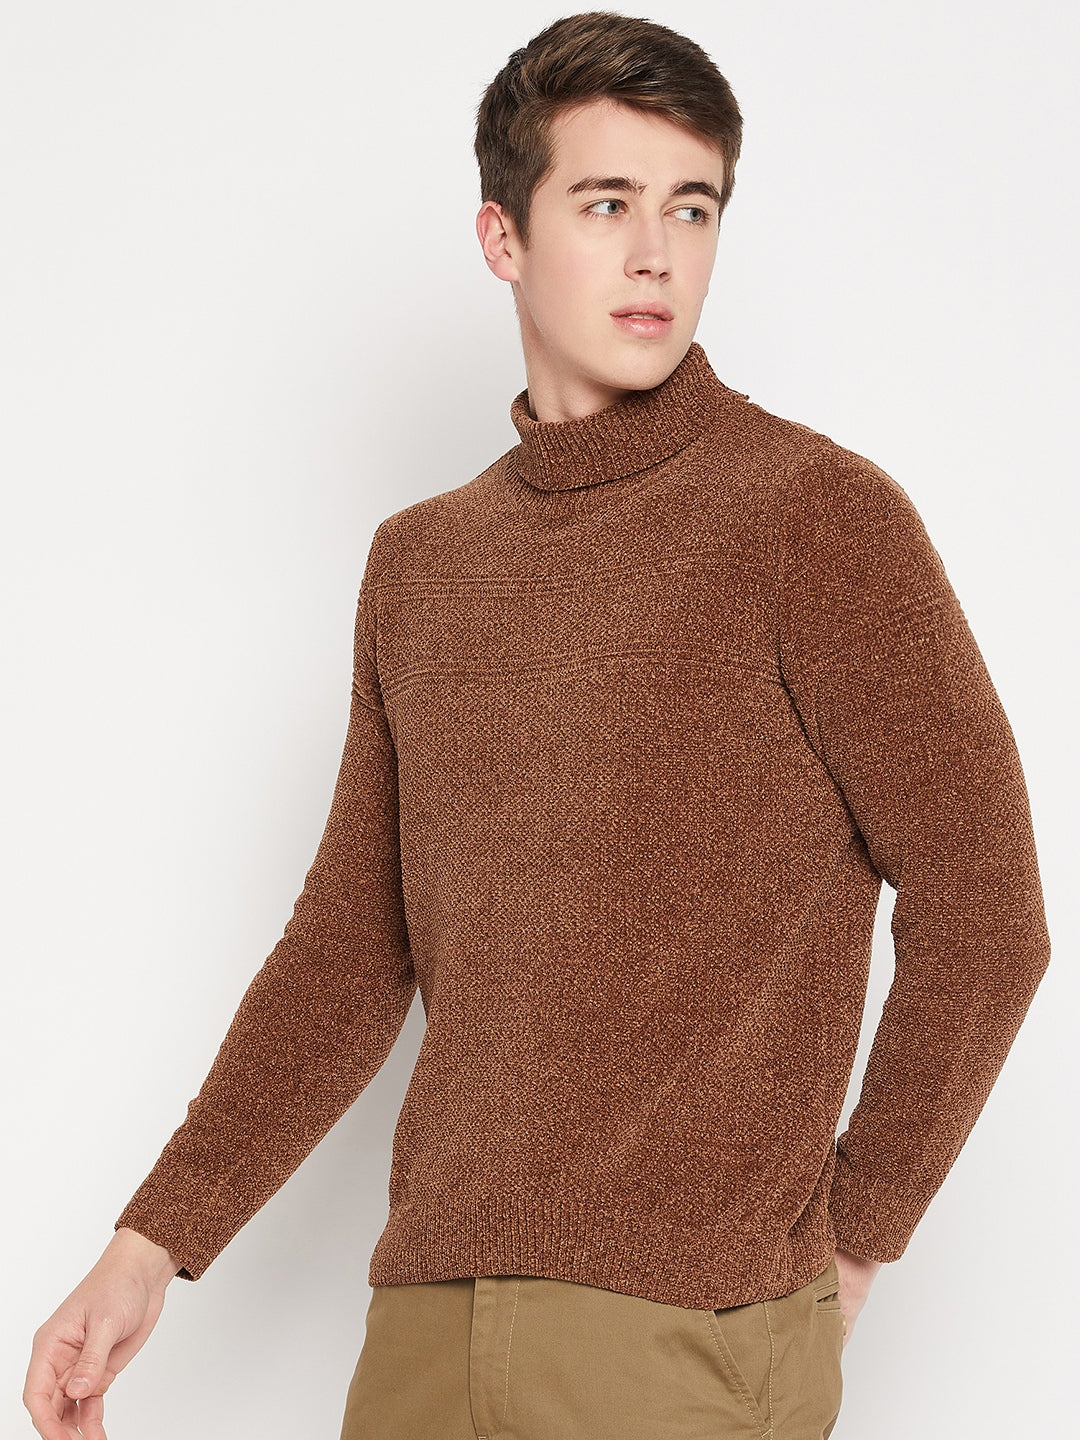 Camla Barcelona Brown Sweater For Men